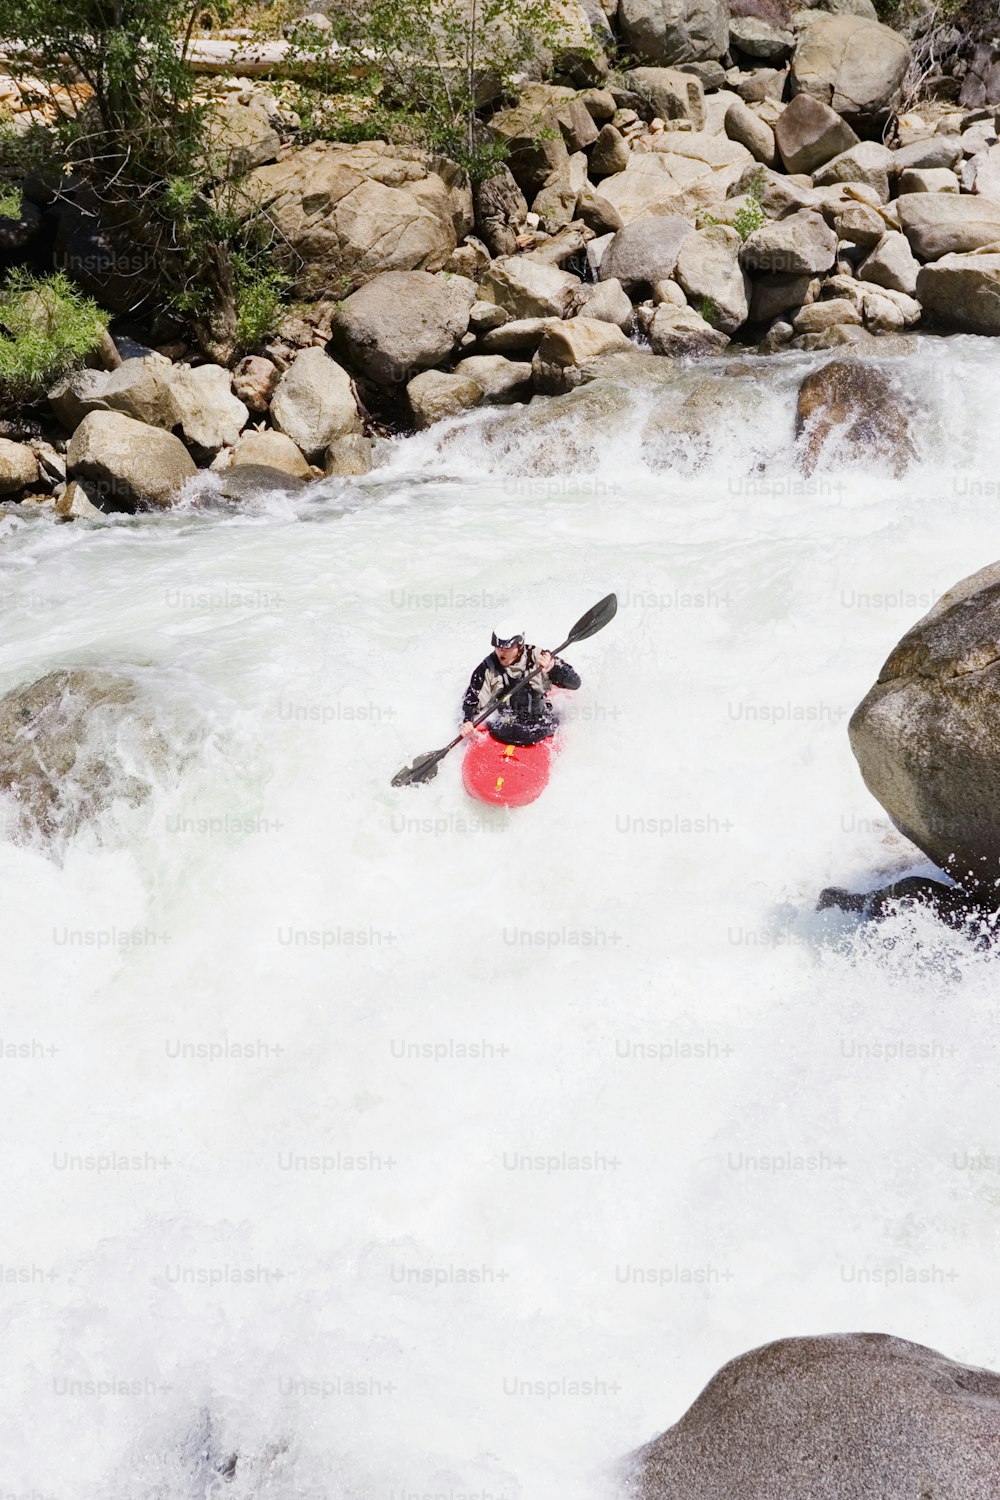 una persona in un kayak in un fiume